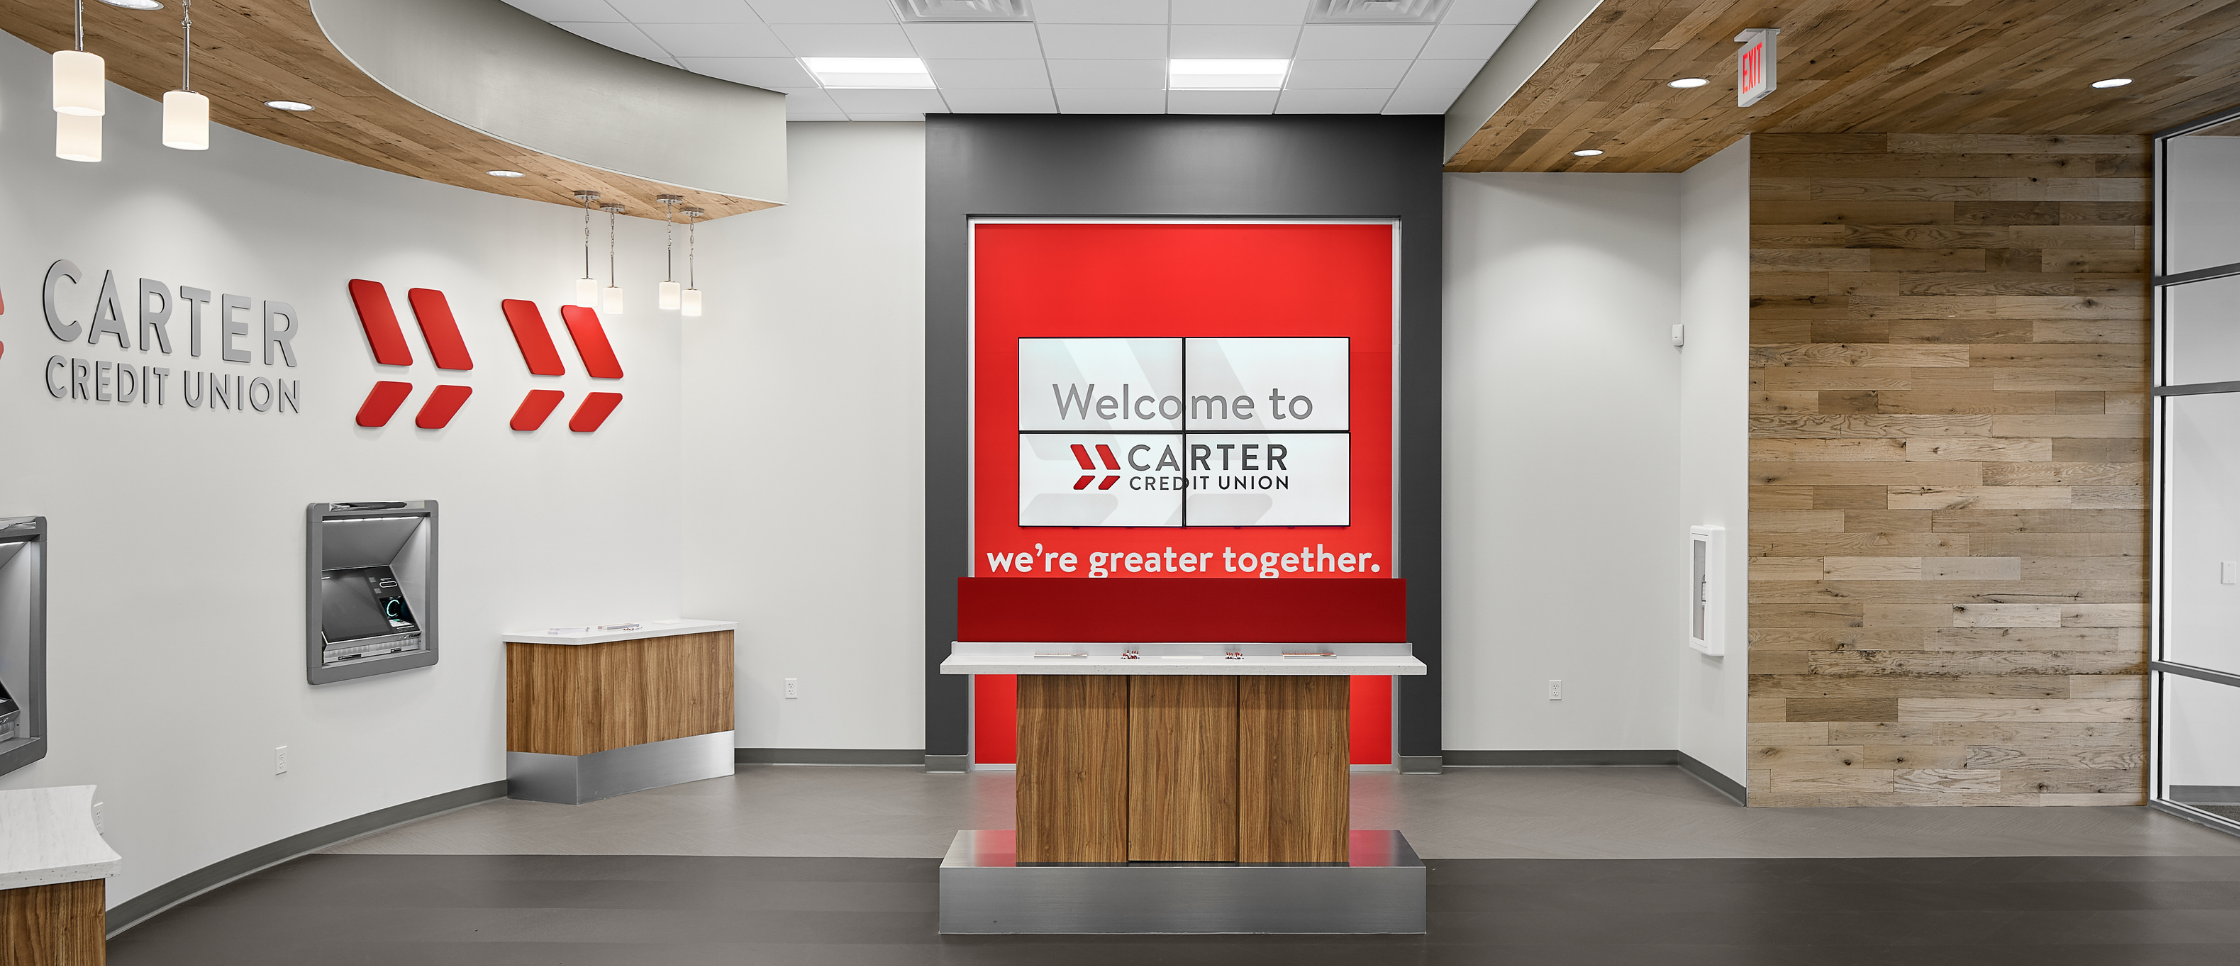 Carter Credit Union Branch Interior